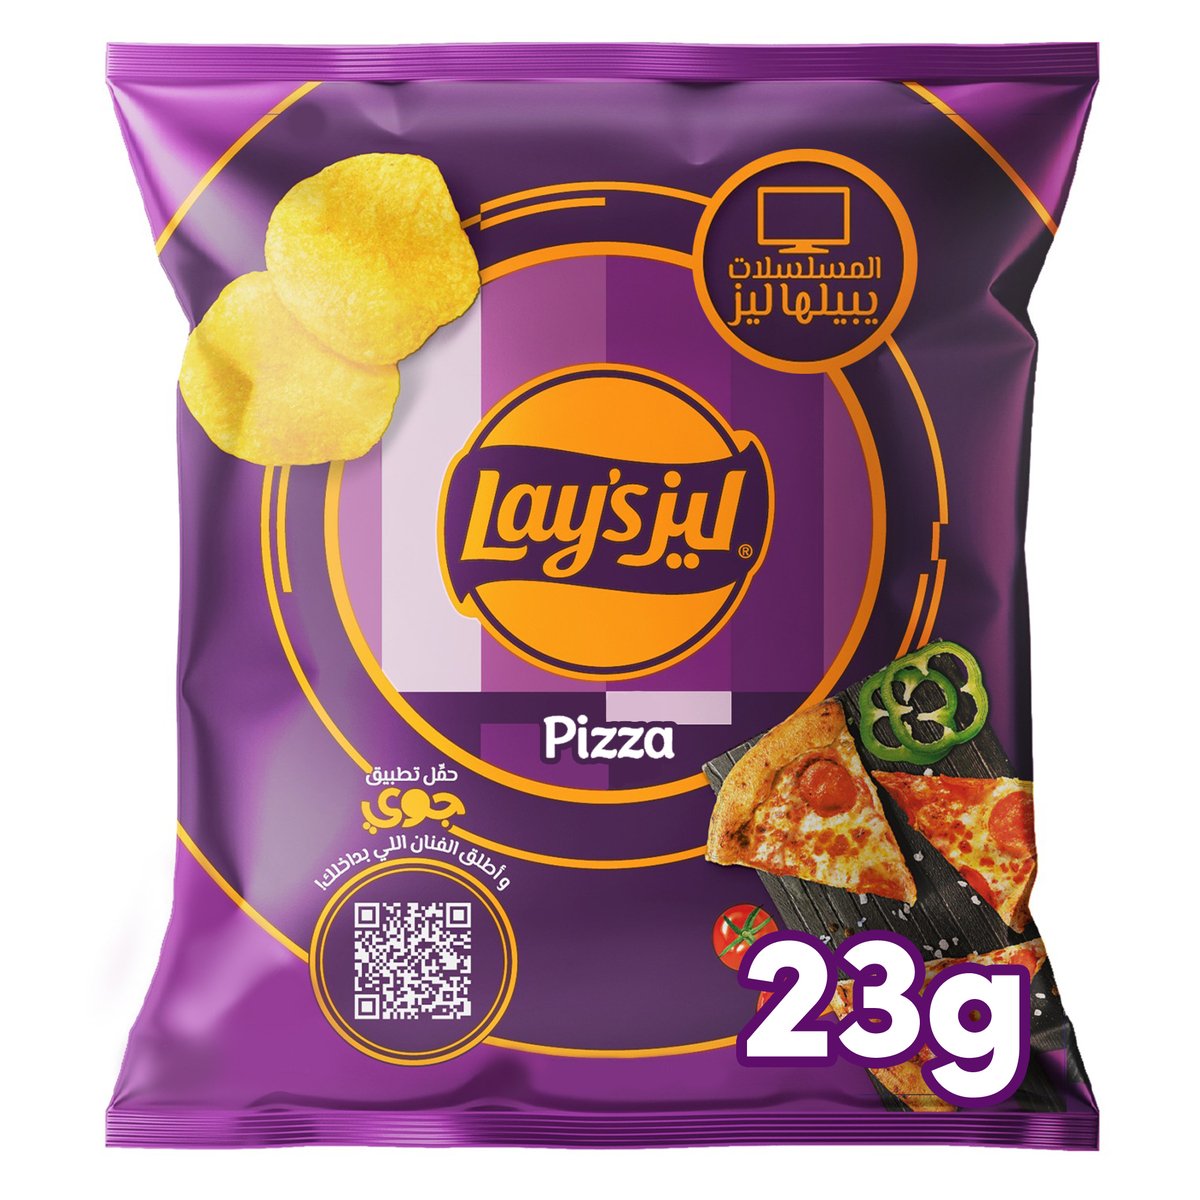 Lay’s Pizza Crispy & Crunchy Snack 14 x 23 g